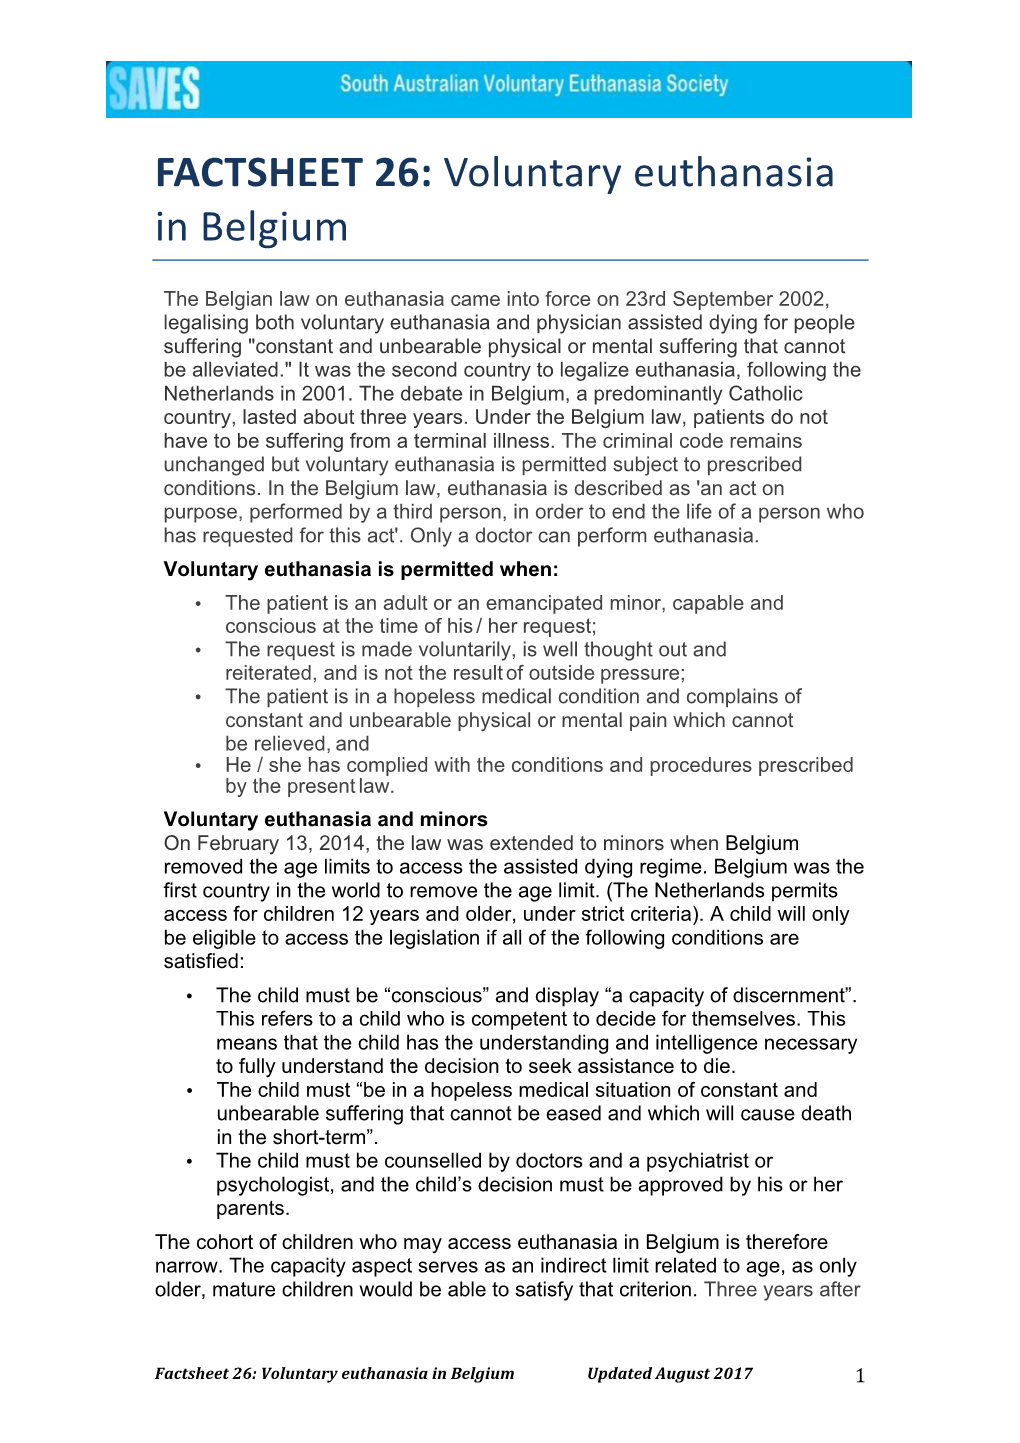 Voluntary Euthanasia in Belgium